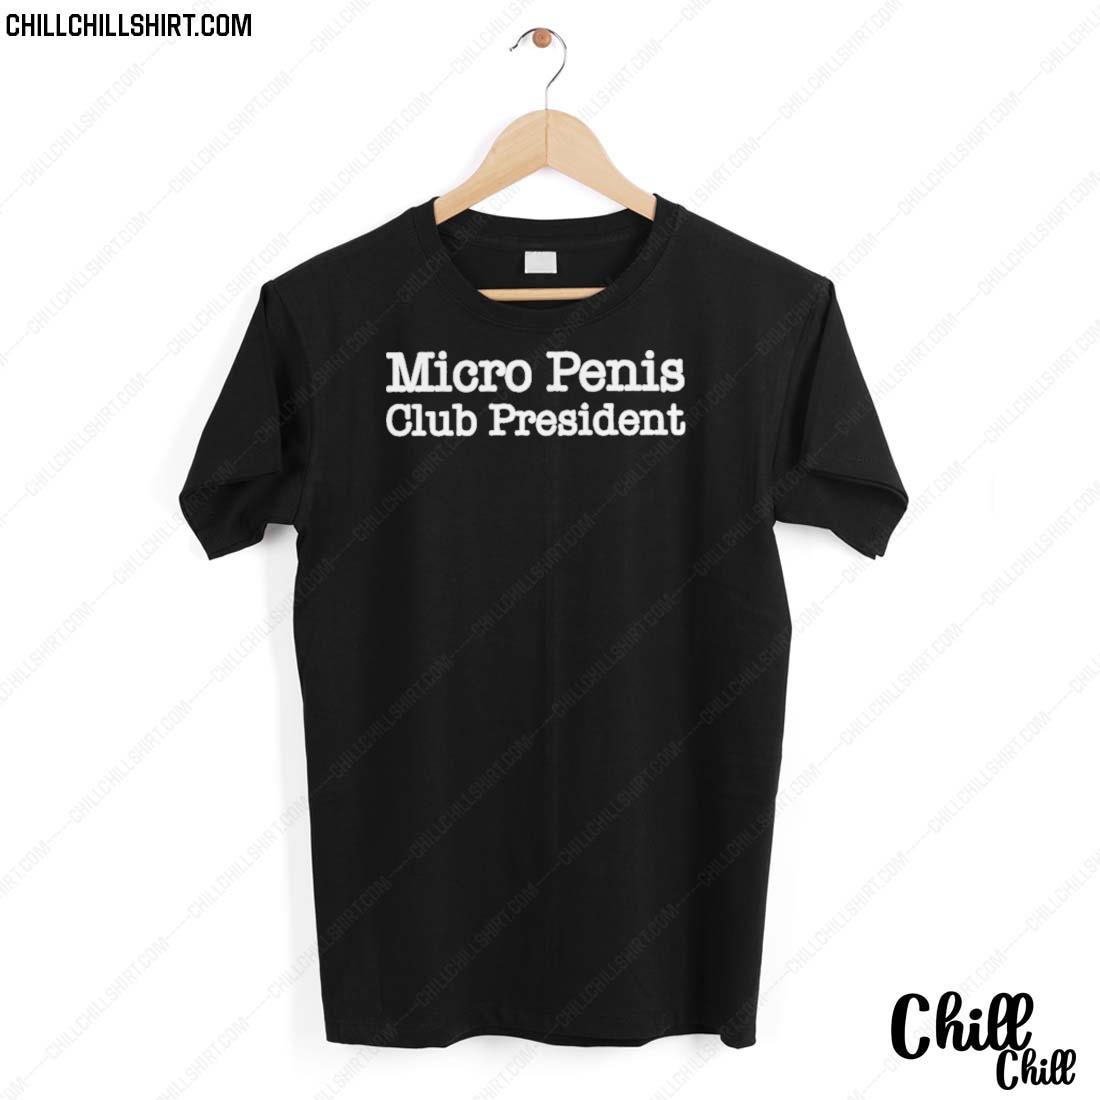 Nice micro Penis Club President T-shirt